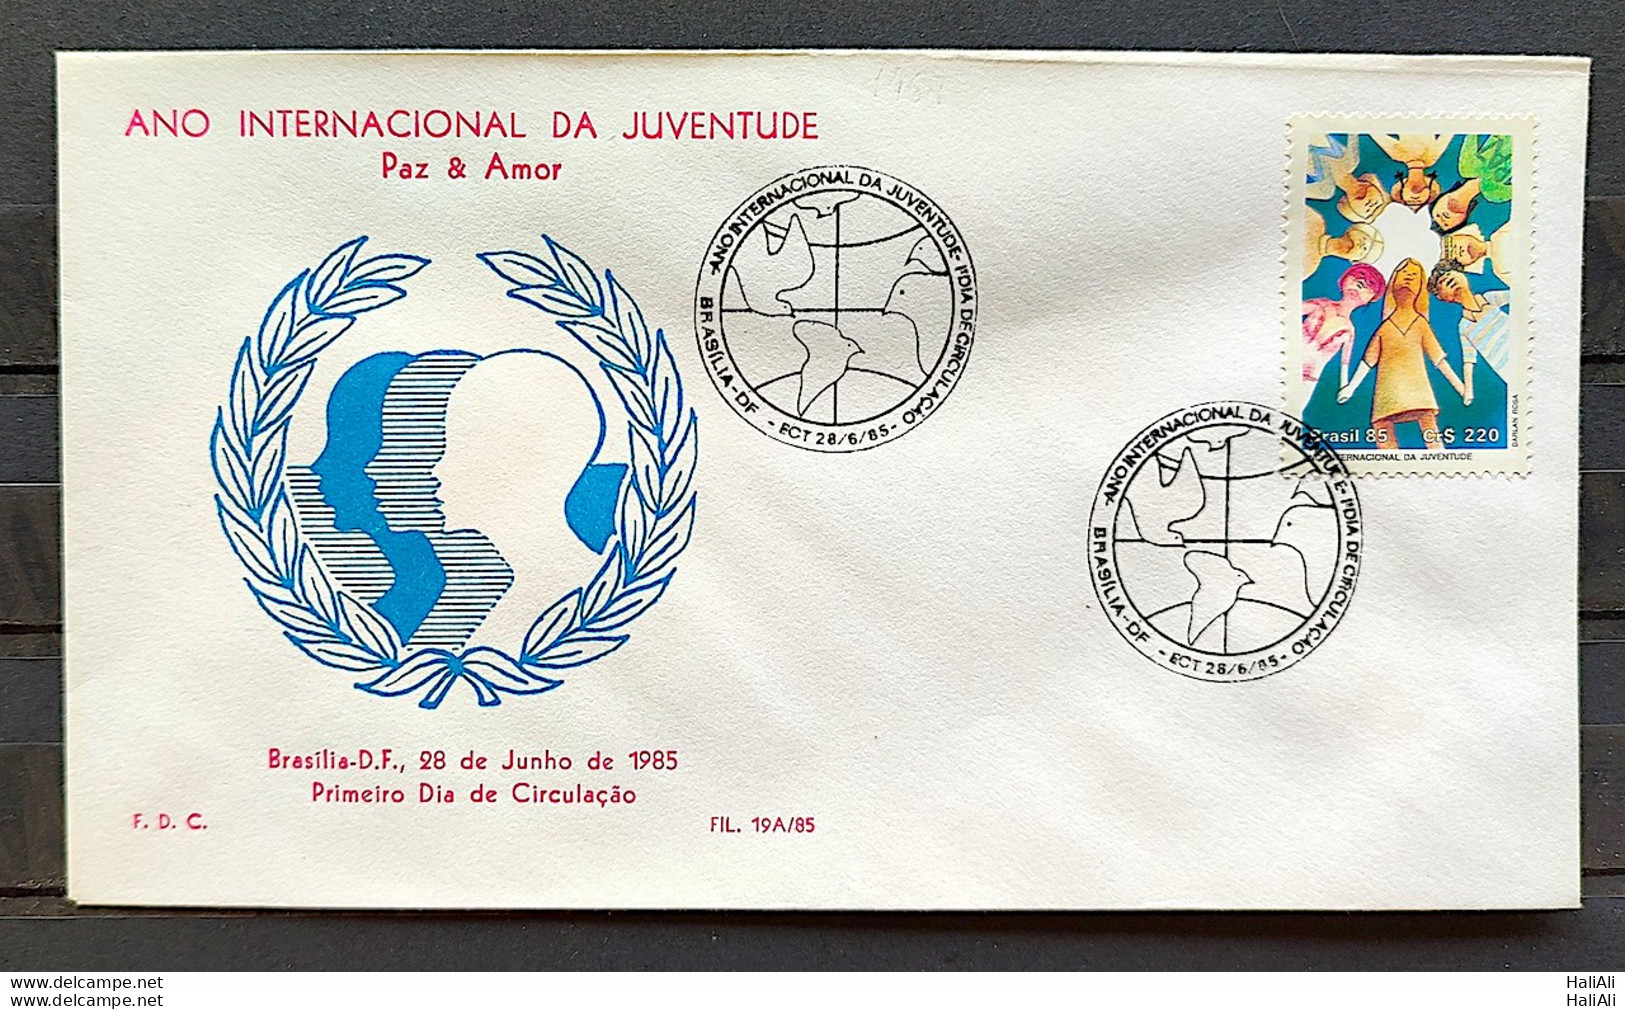 Brazil Envelope PVT FIL 19A 1985 International Year Of Youth CBC Brasilia - FDC